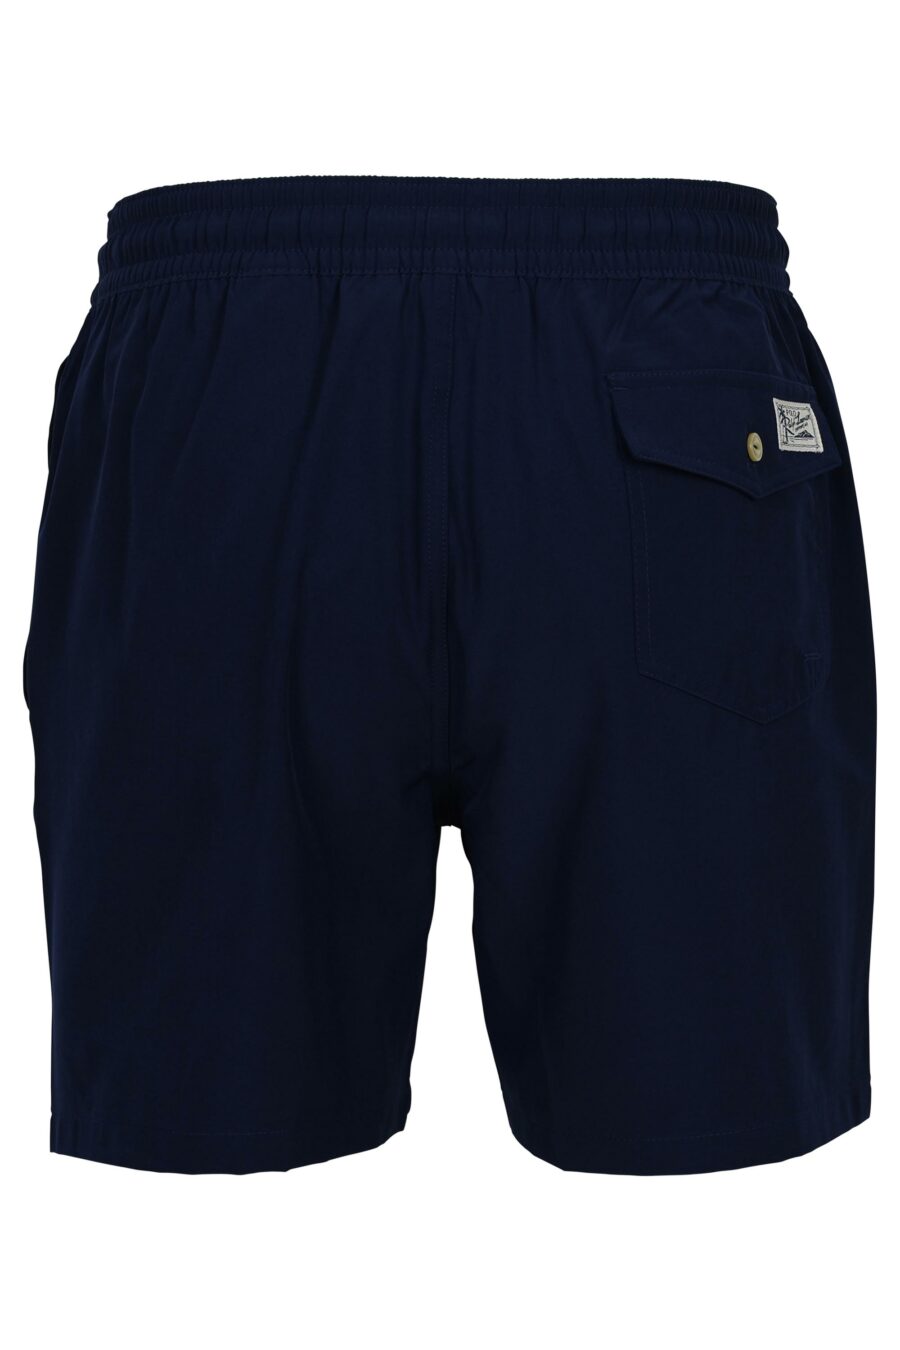 Dark blue minilogo "polo" shorts - 3616851078616 2